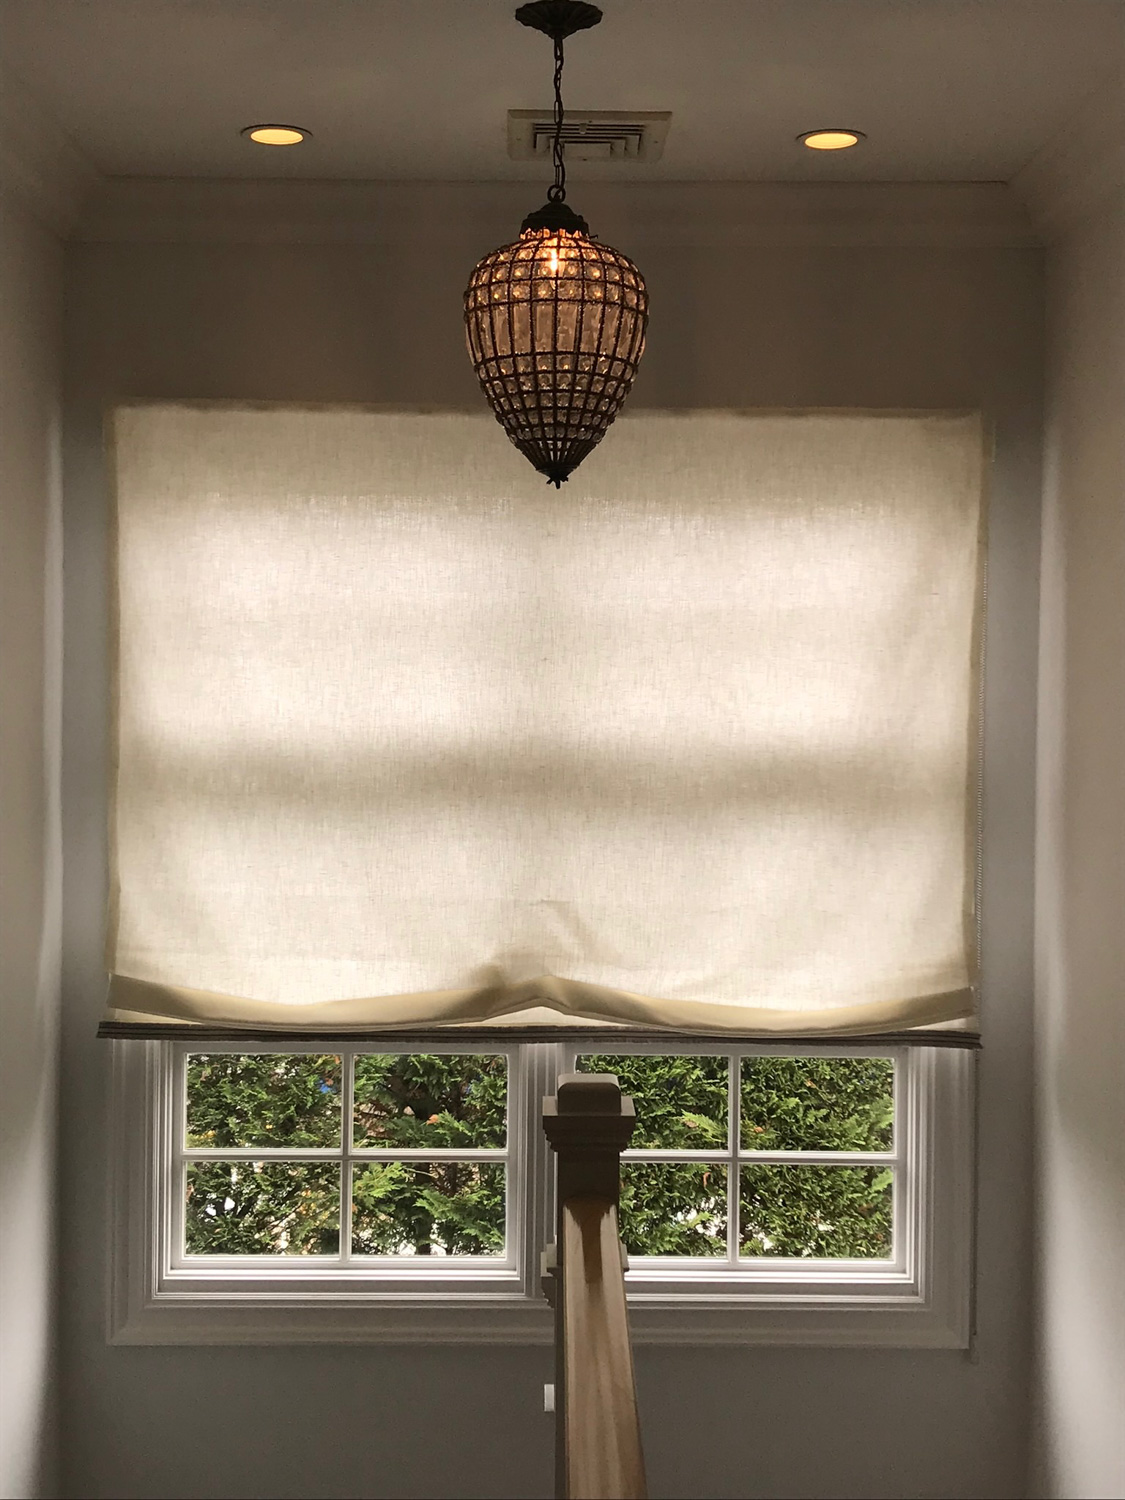 Window with fabric roman shade and lamp.